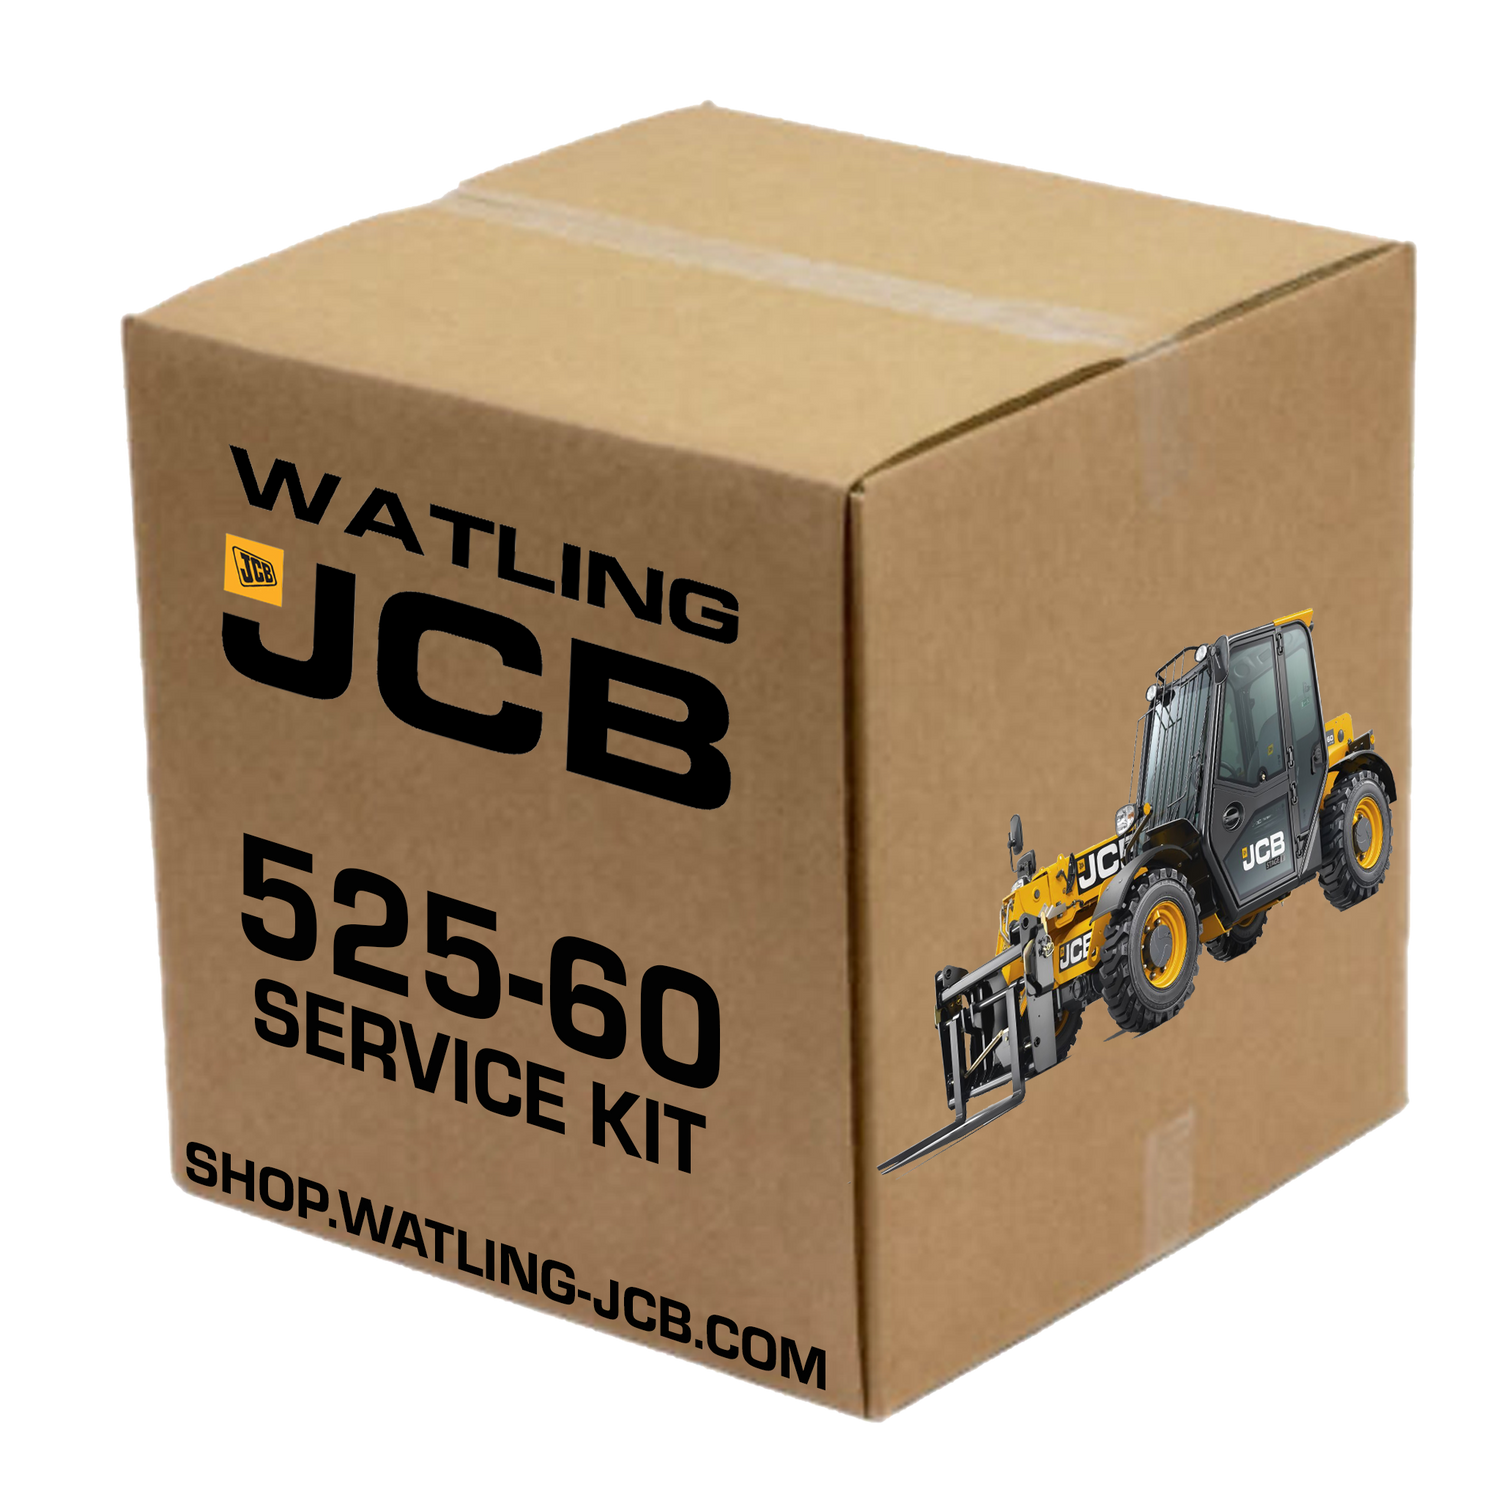 JCB 525-60 Service Kits